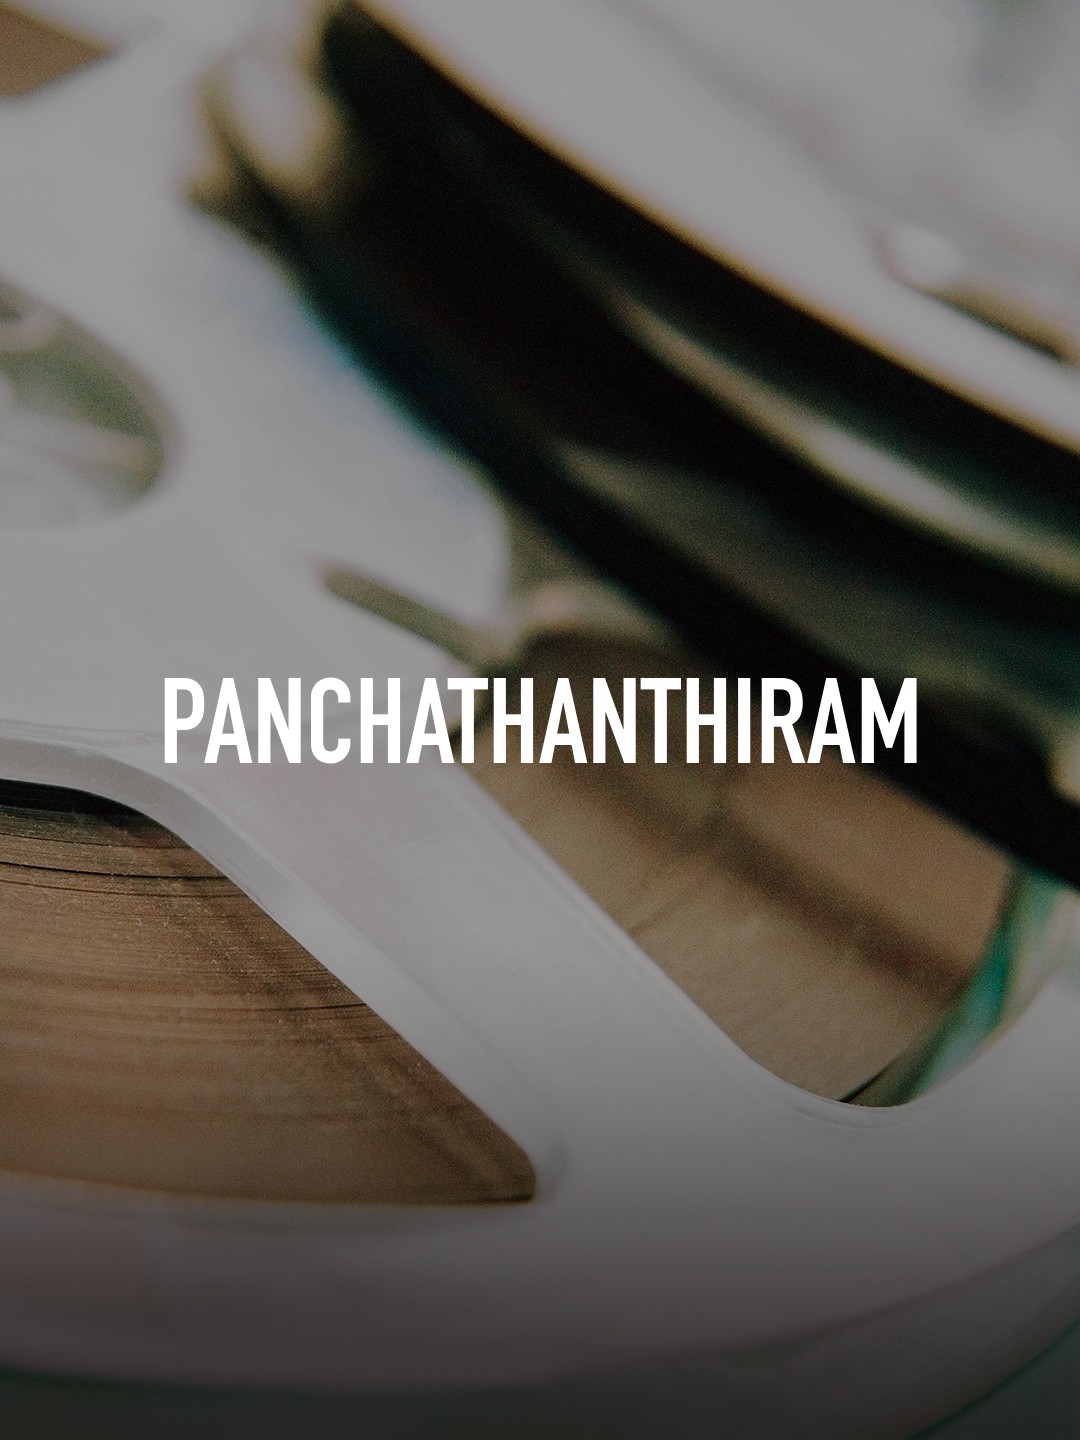 Panchathanthiram - Panchathanthiram Tamil Movie News, Reviews, Music,  Photos, Videos | Galatta